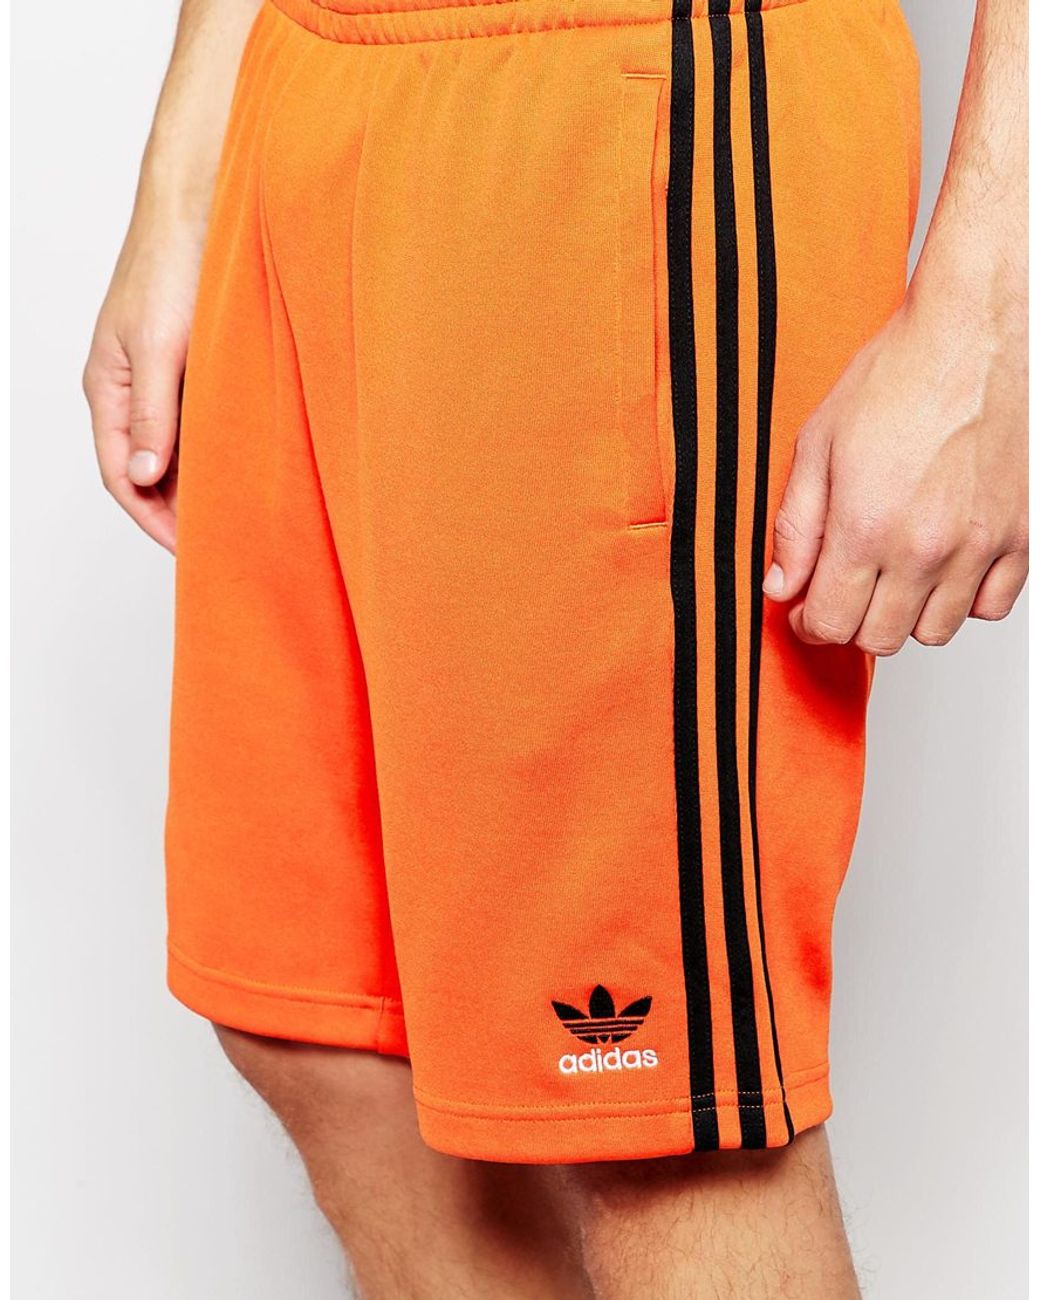 adidas Originals Superstar Shorts Aj6940 in Orange for Men